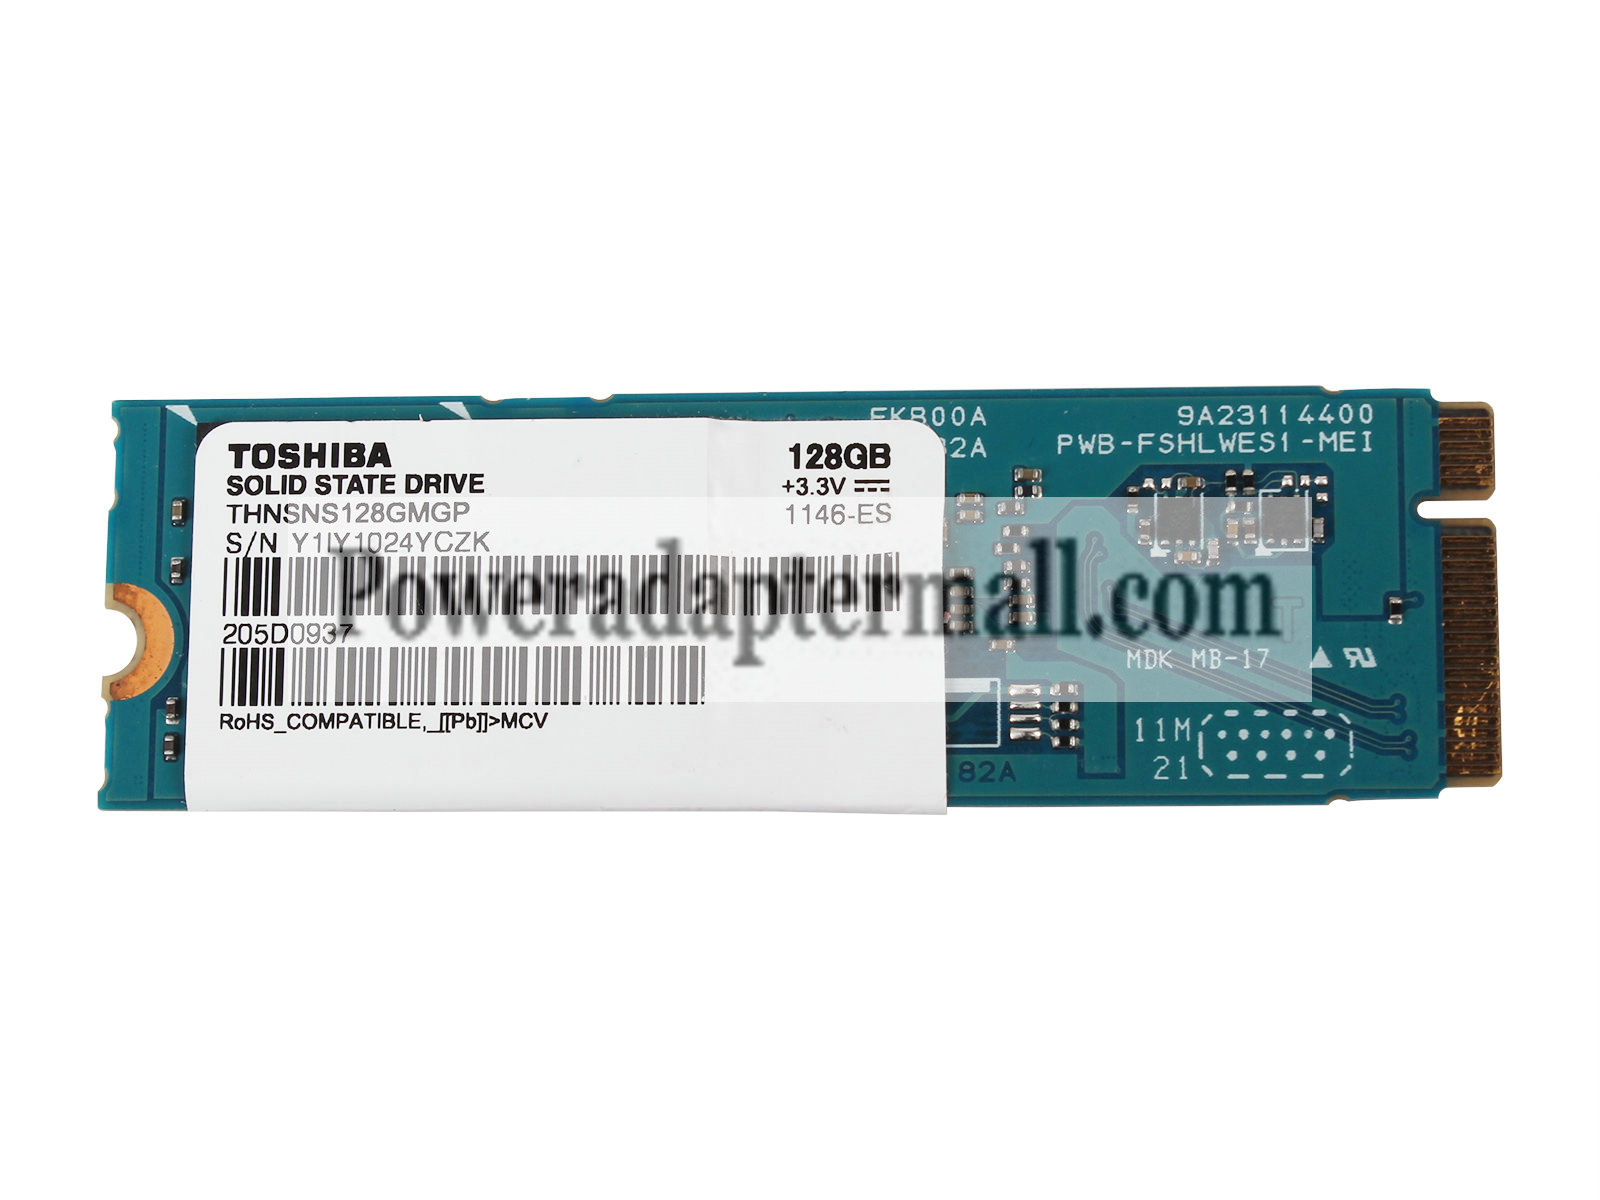 Toshiba THNSNS128GMGP 128GB SSD Solid State Drive for ThinkPad